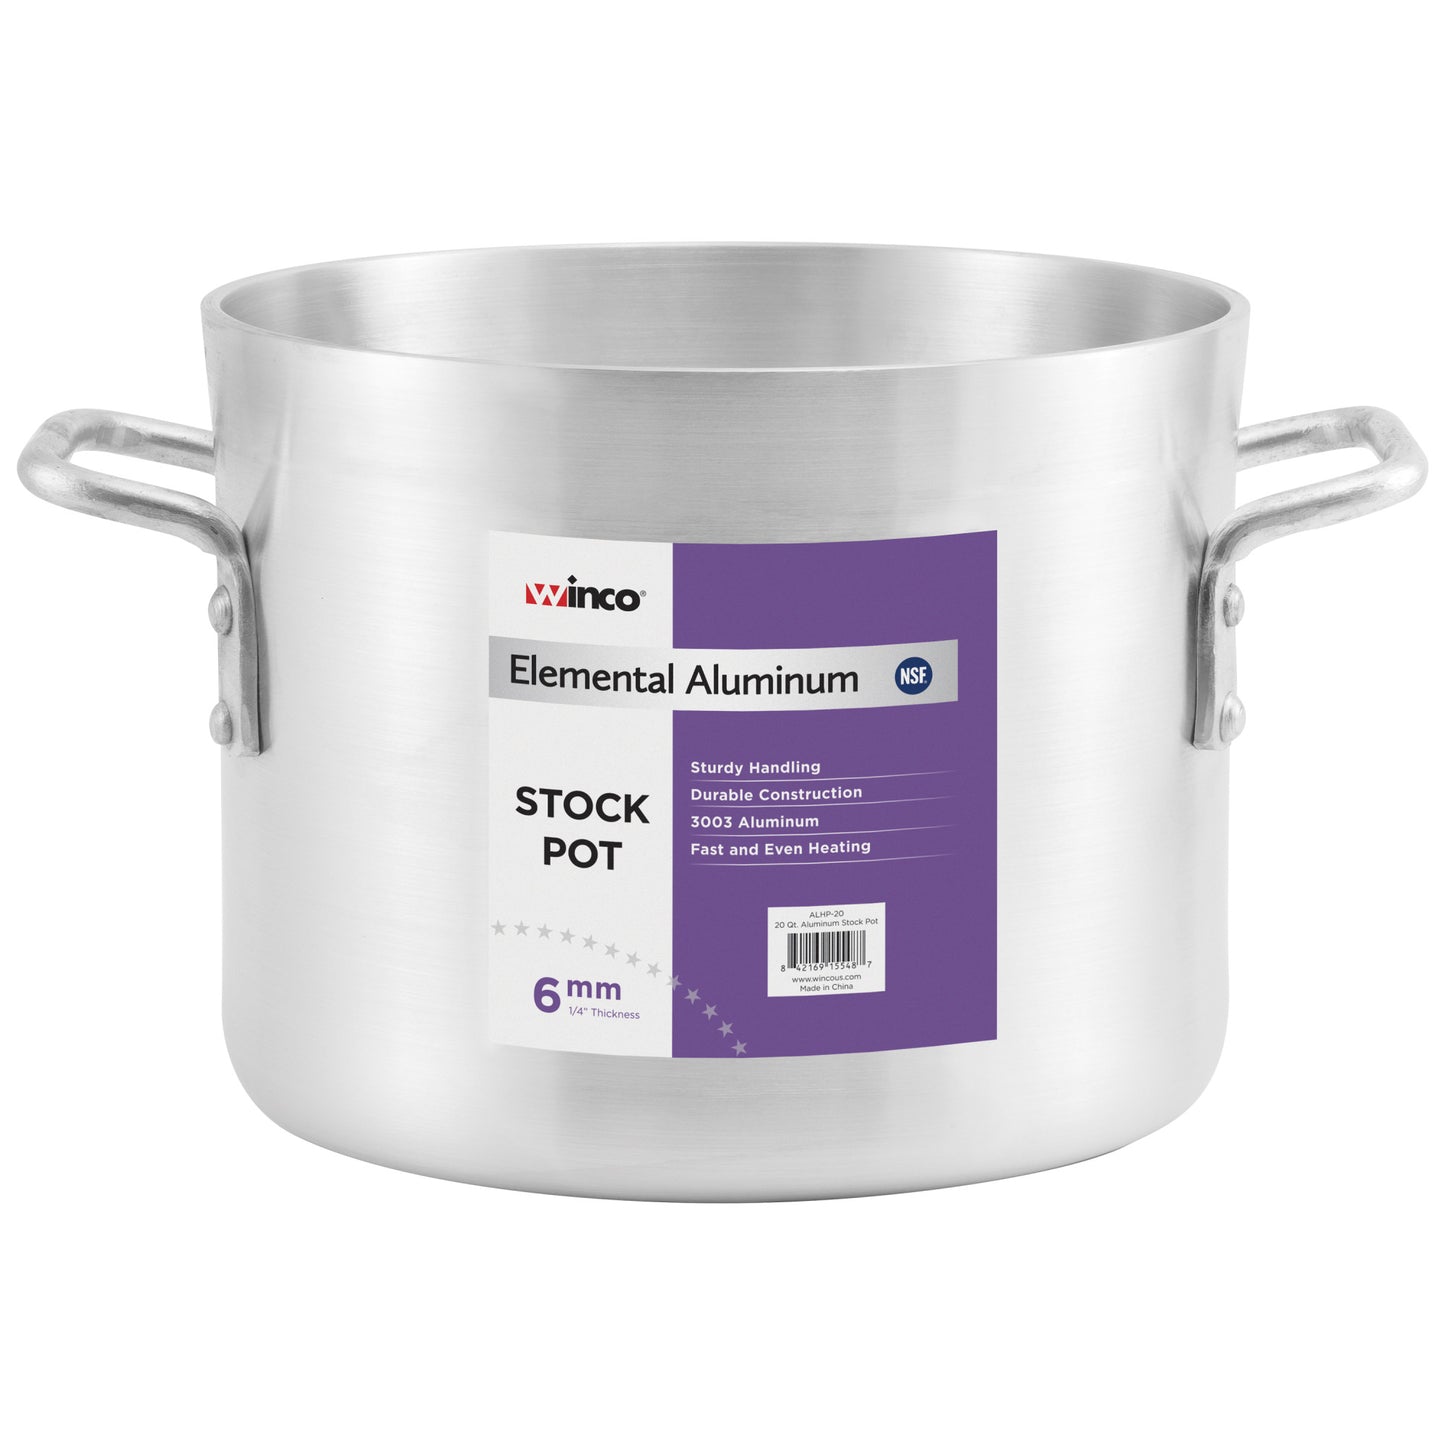 ALHP-32 - Elemental Aluminum Stock Pot, 6mm - 32 Quart